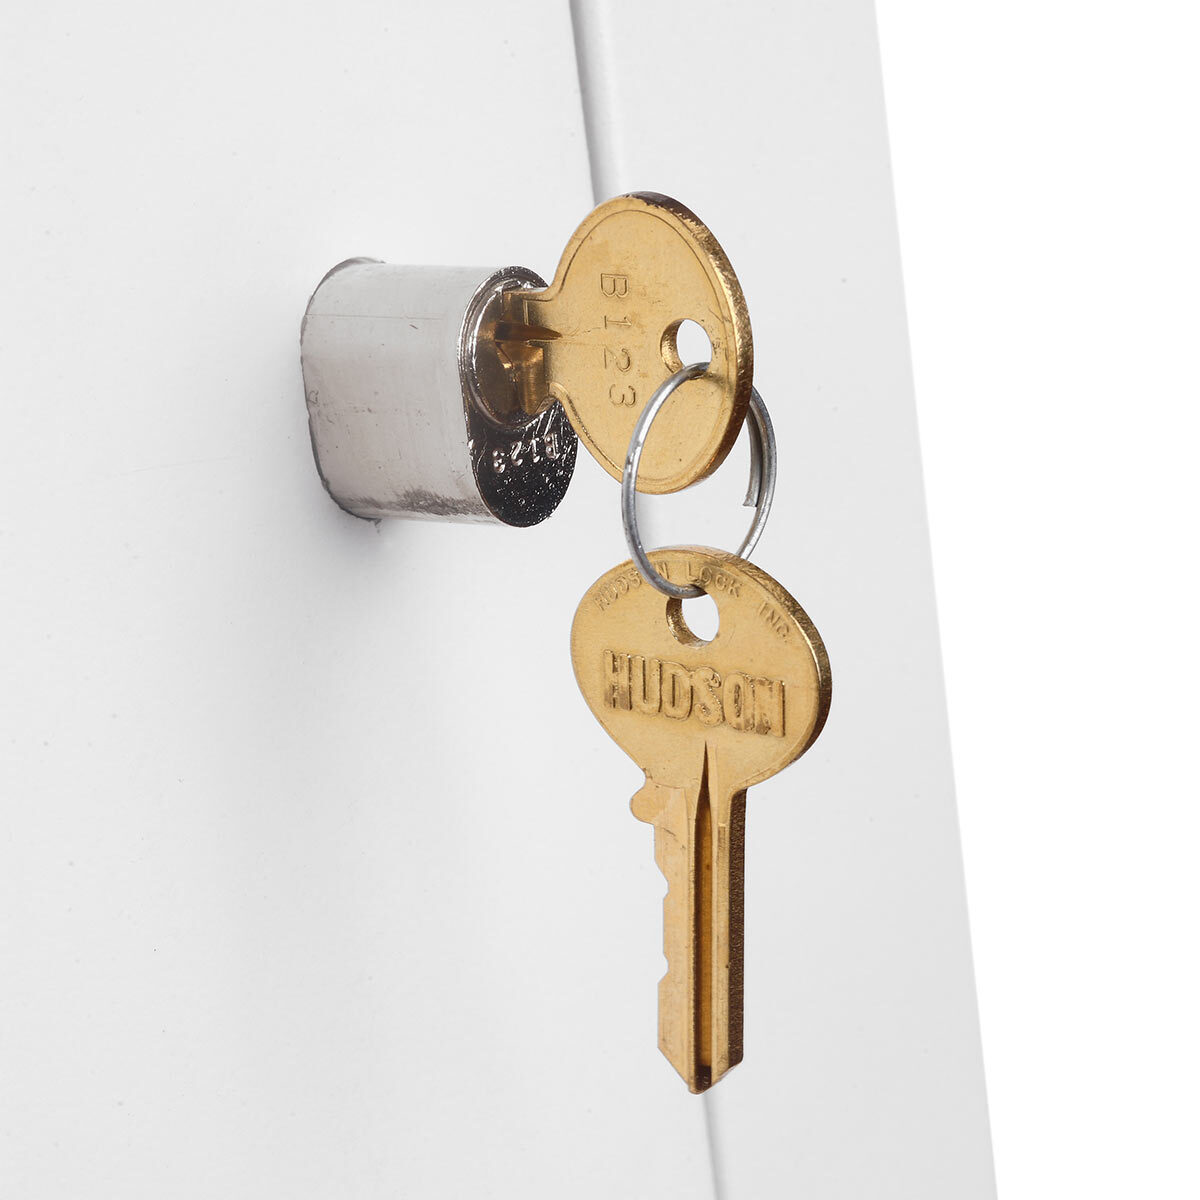 Close up image of lock and key